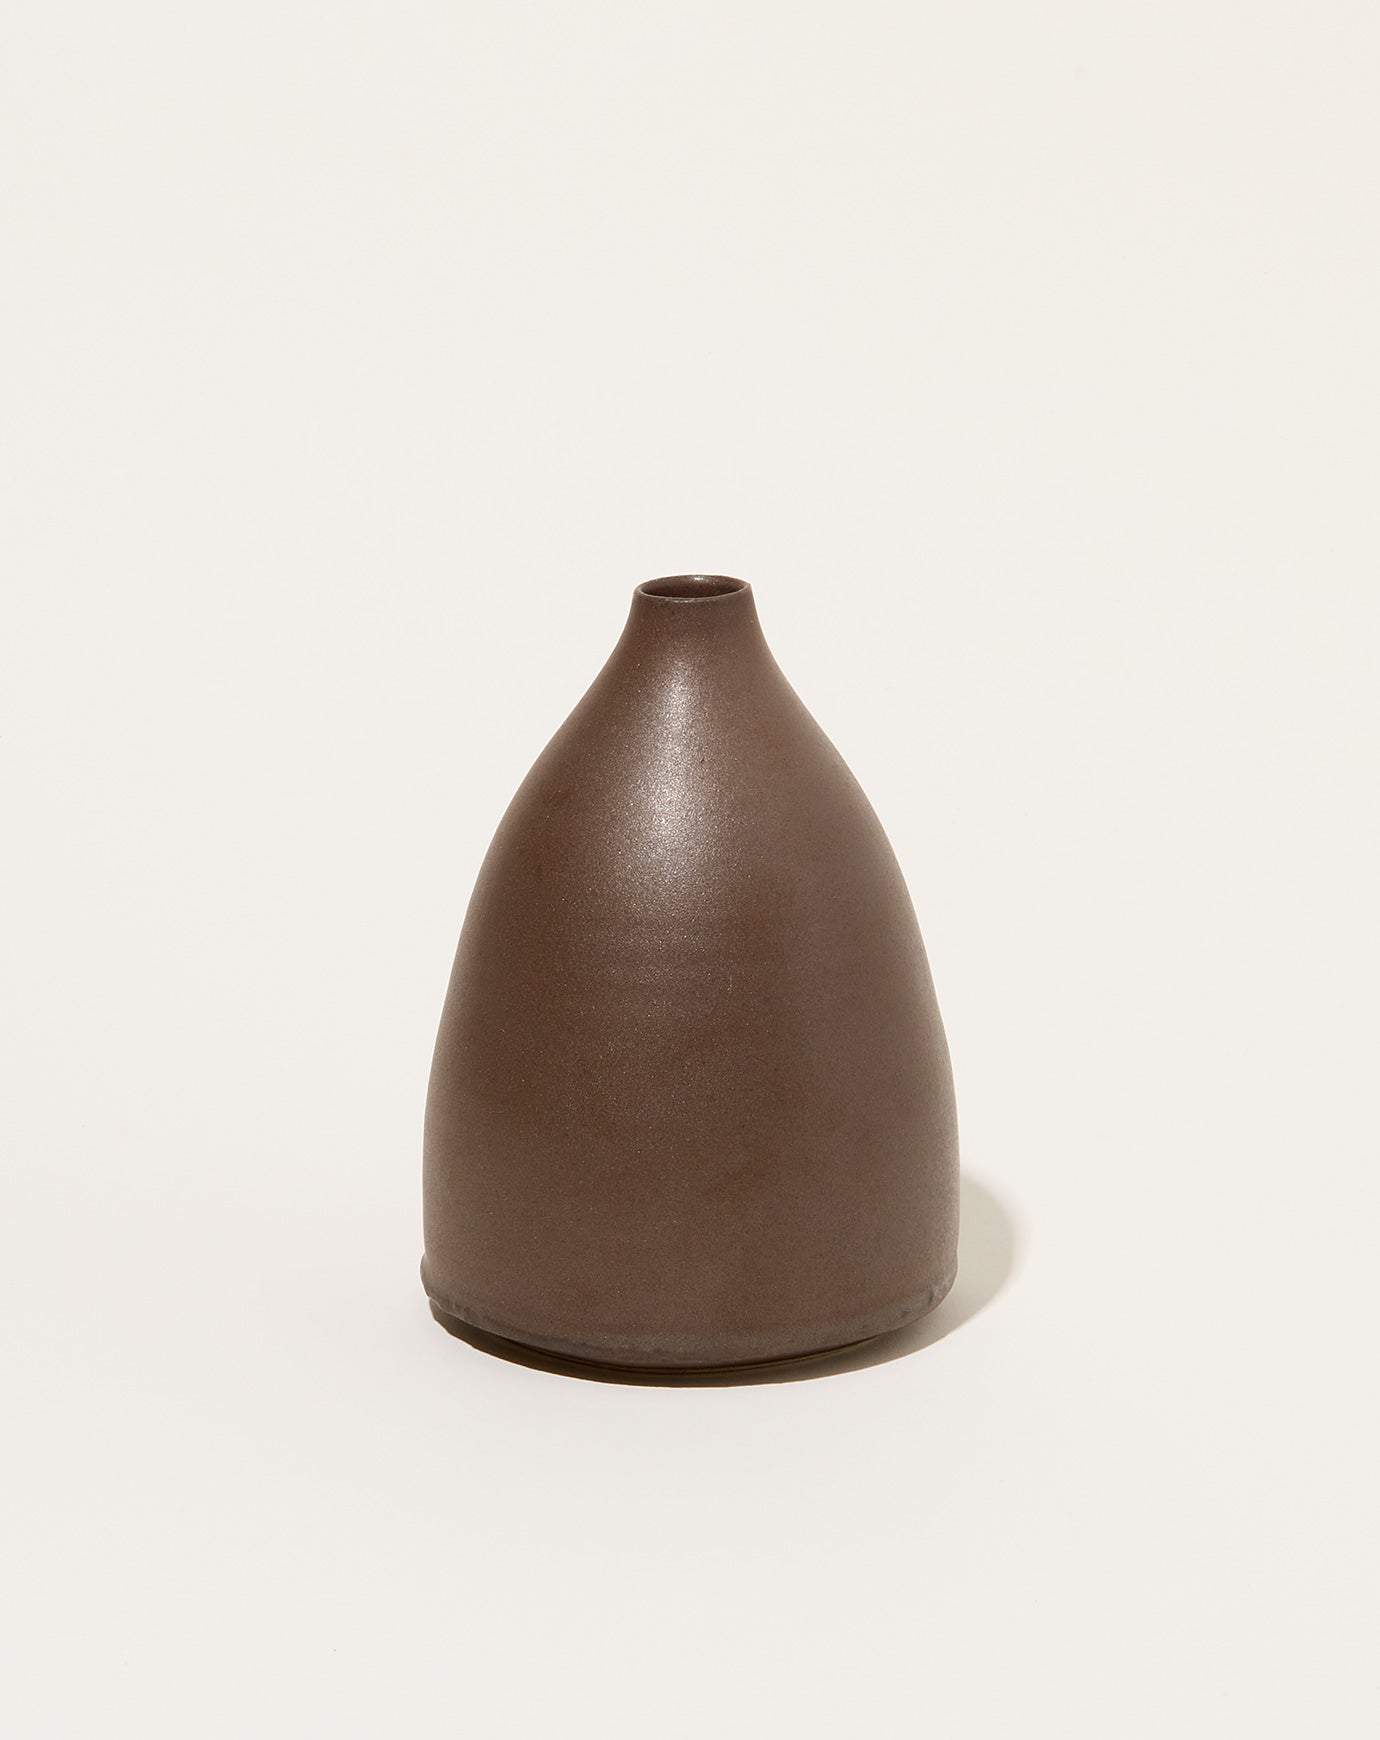 Monohanako Vase in Chocolate